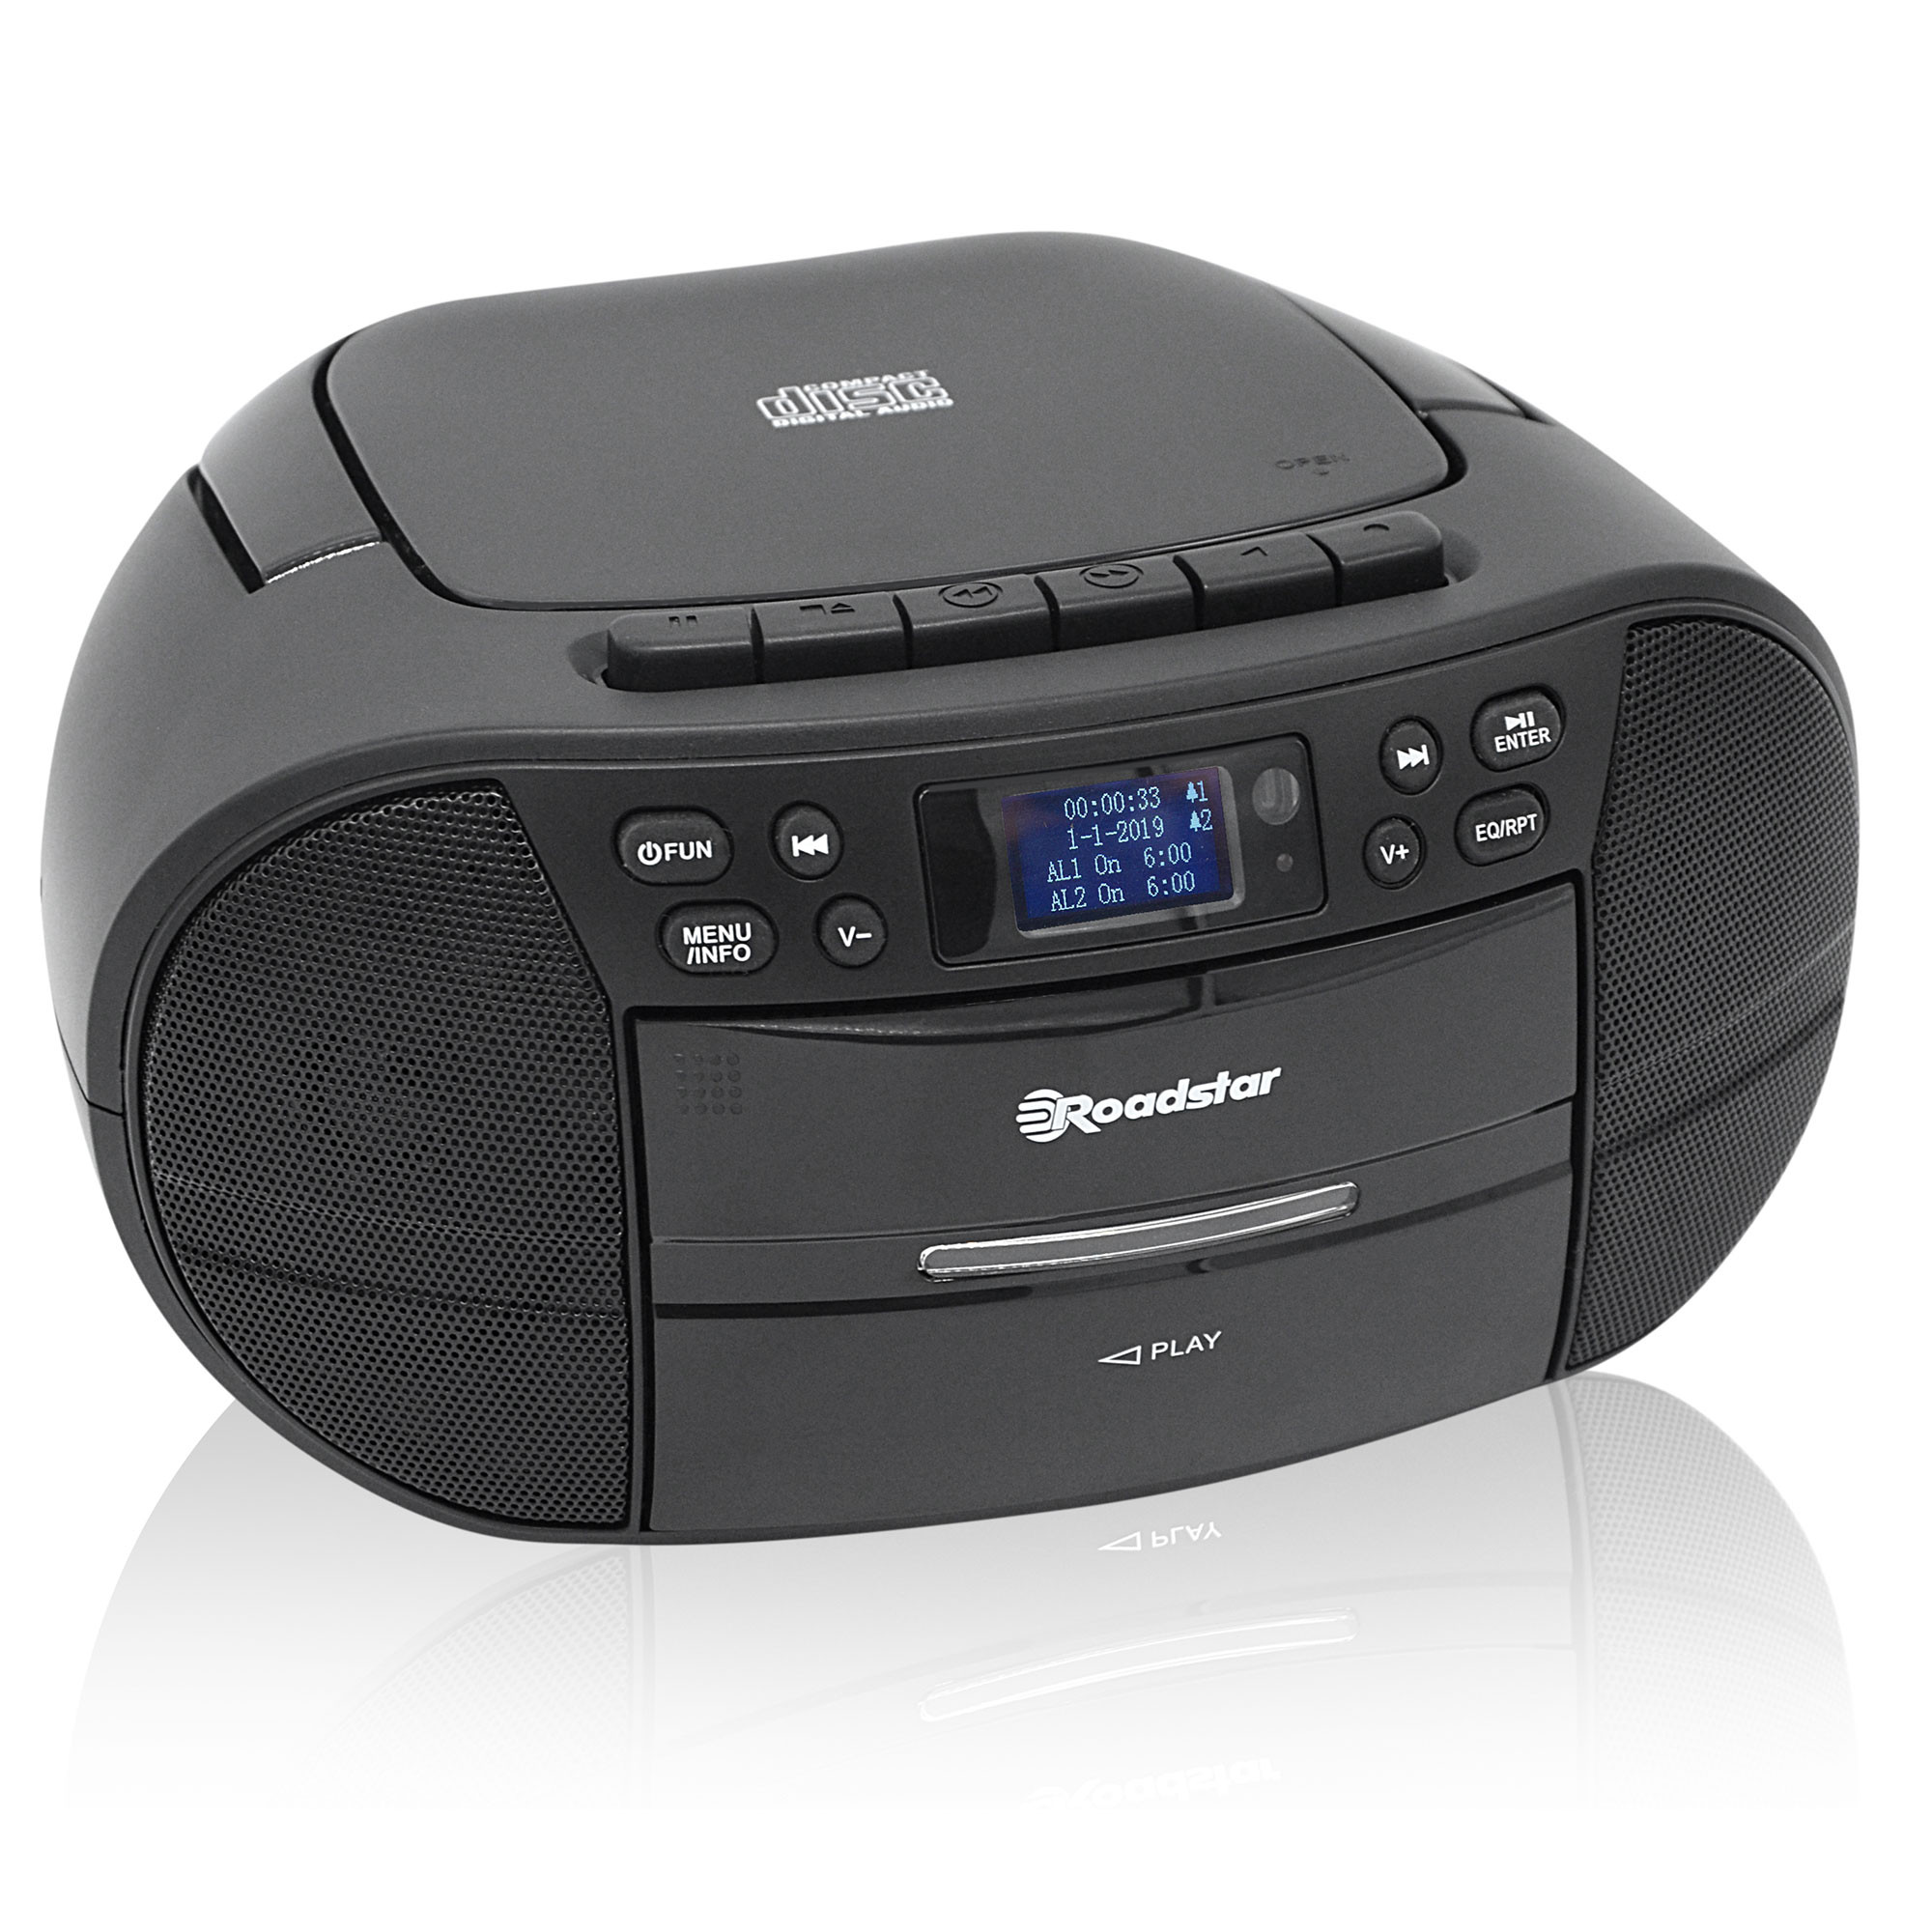 Roadstar RCR-779D+/BK Radio Cassette con Portátil DAB / DAB+ / FM, Reproductor CD-MP3, USB, Mando a Distancia, AUX-IN, Salida de